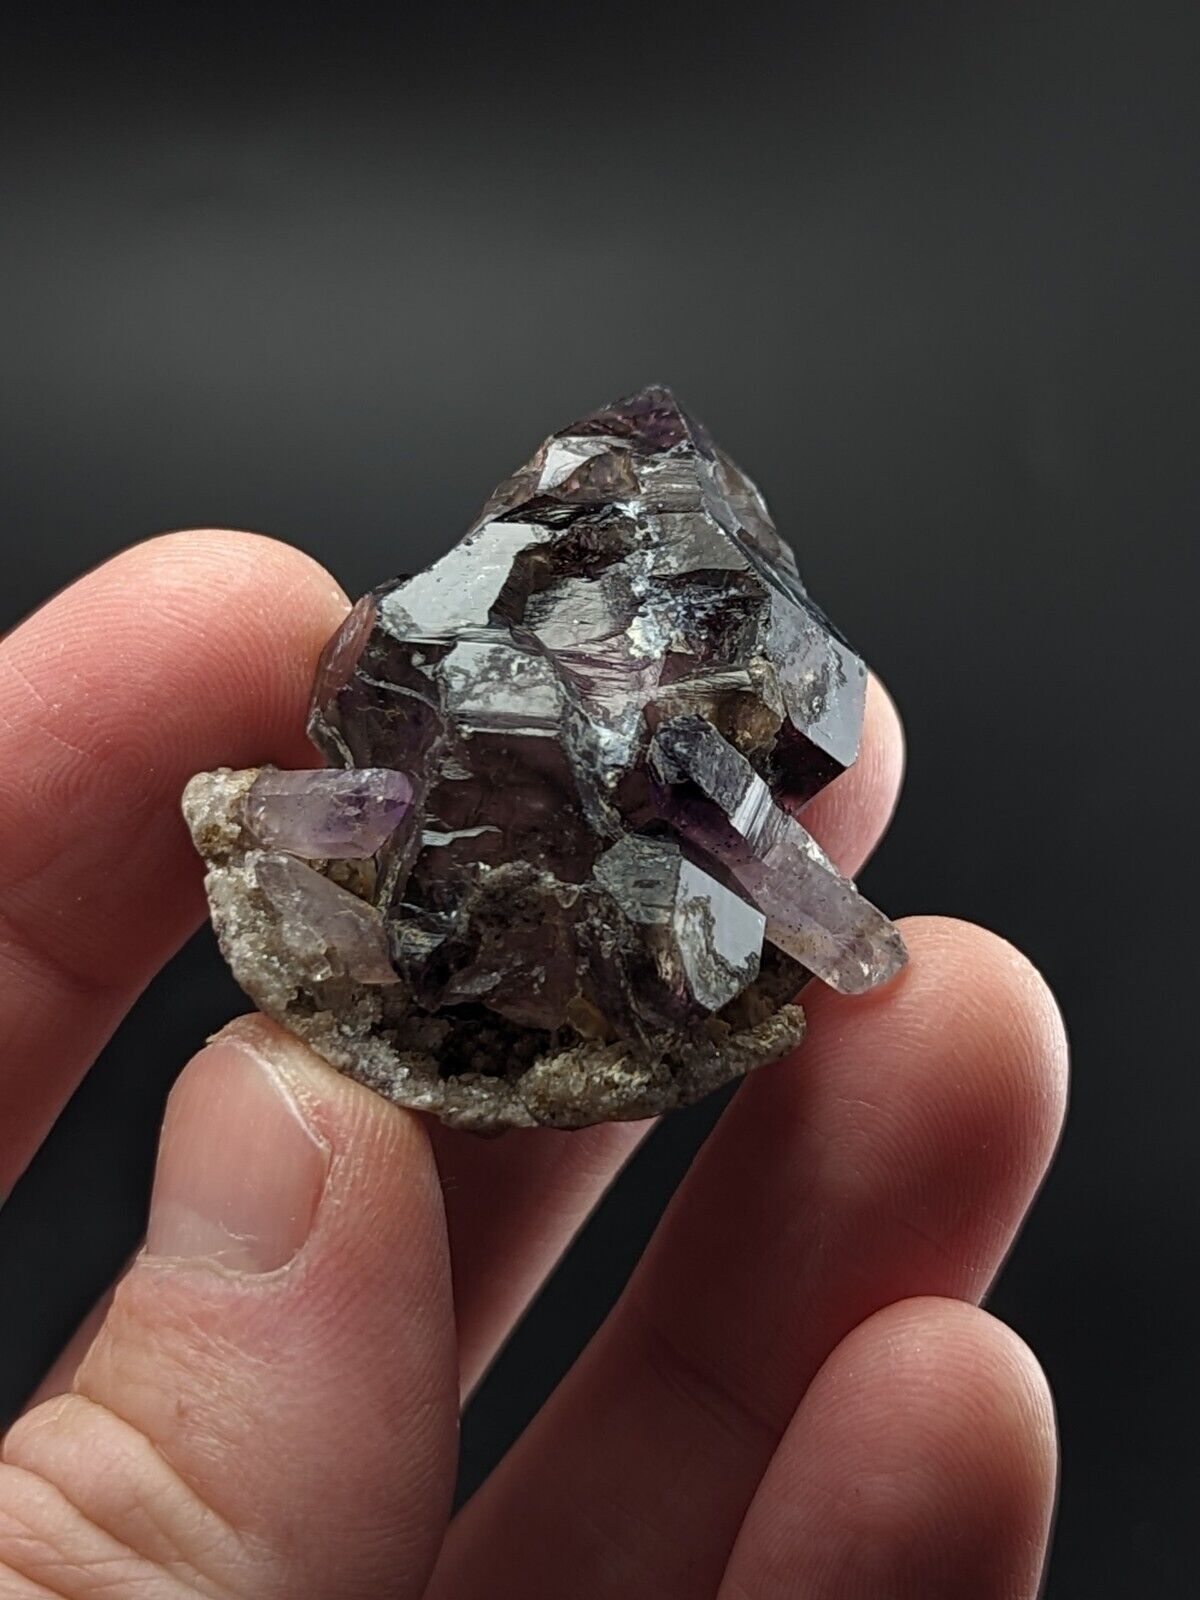 Shangaan Amethyst Scepter Crystal from Chibuku Zimbabwe, "Hatched Egg"